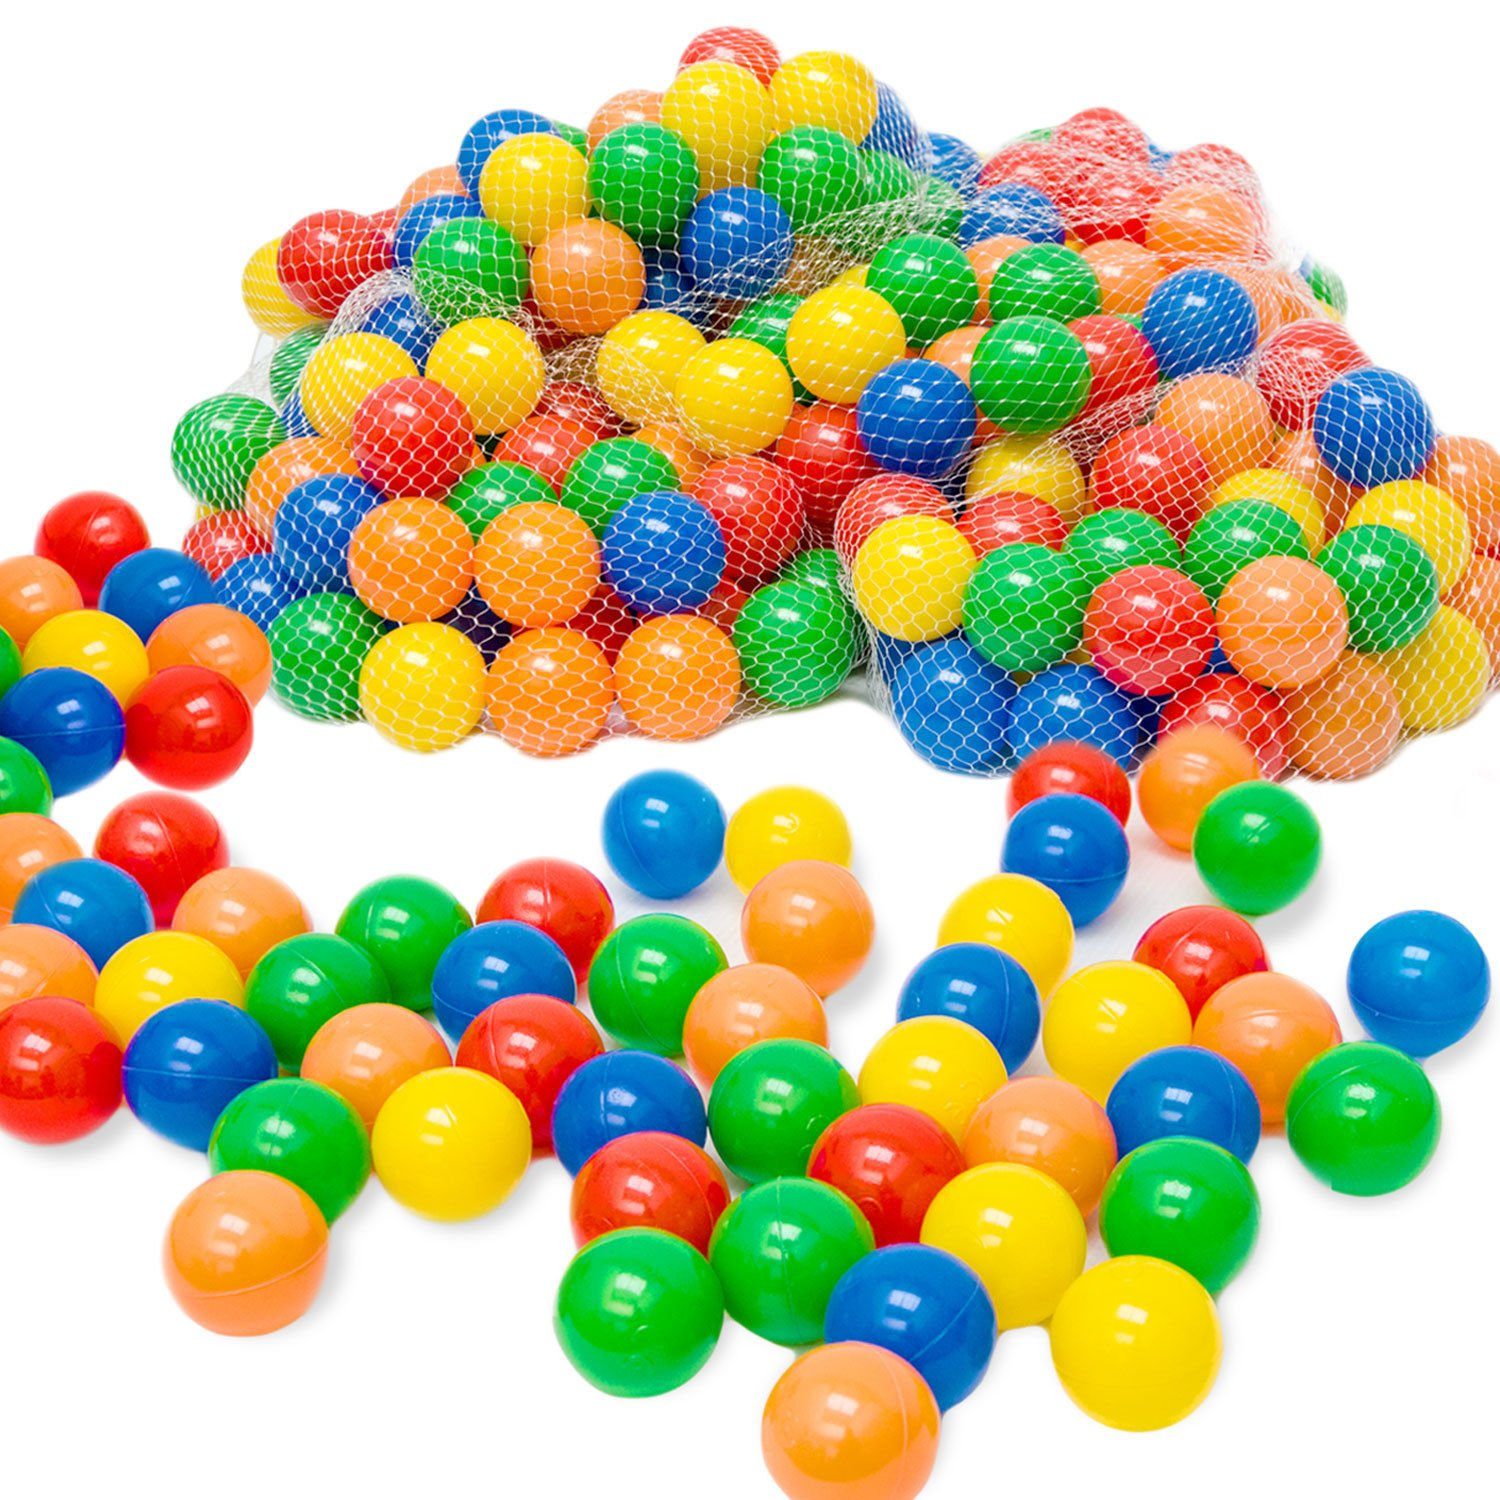 LittleTom Bällebad-Bälle »50 - 10.000 Stück Bällebad Bälle Bällebadbälle«,  Bunte Farben Neuware Ball online kaufen | OTTO